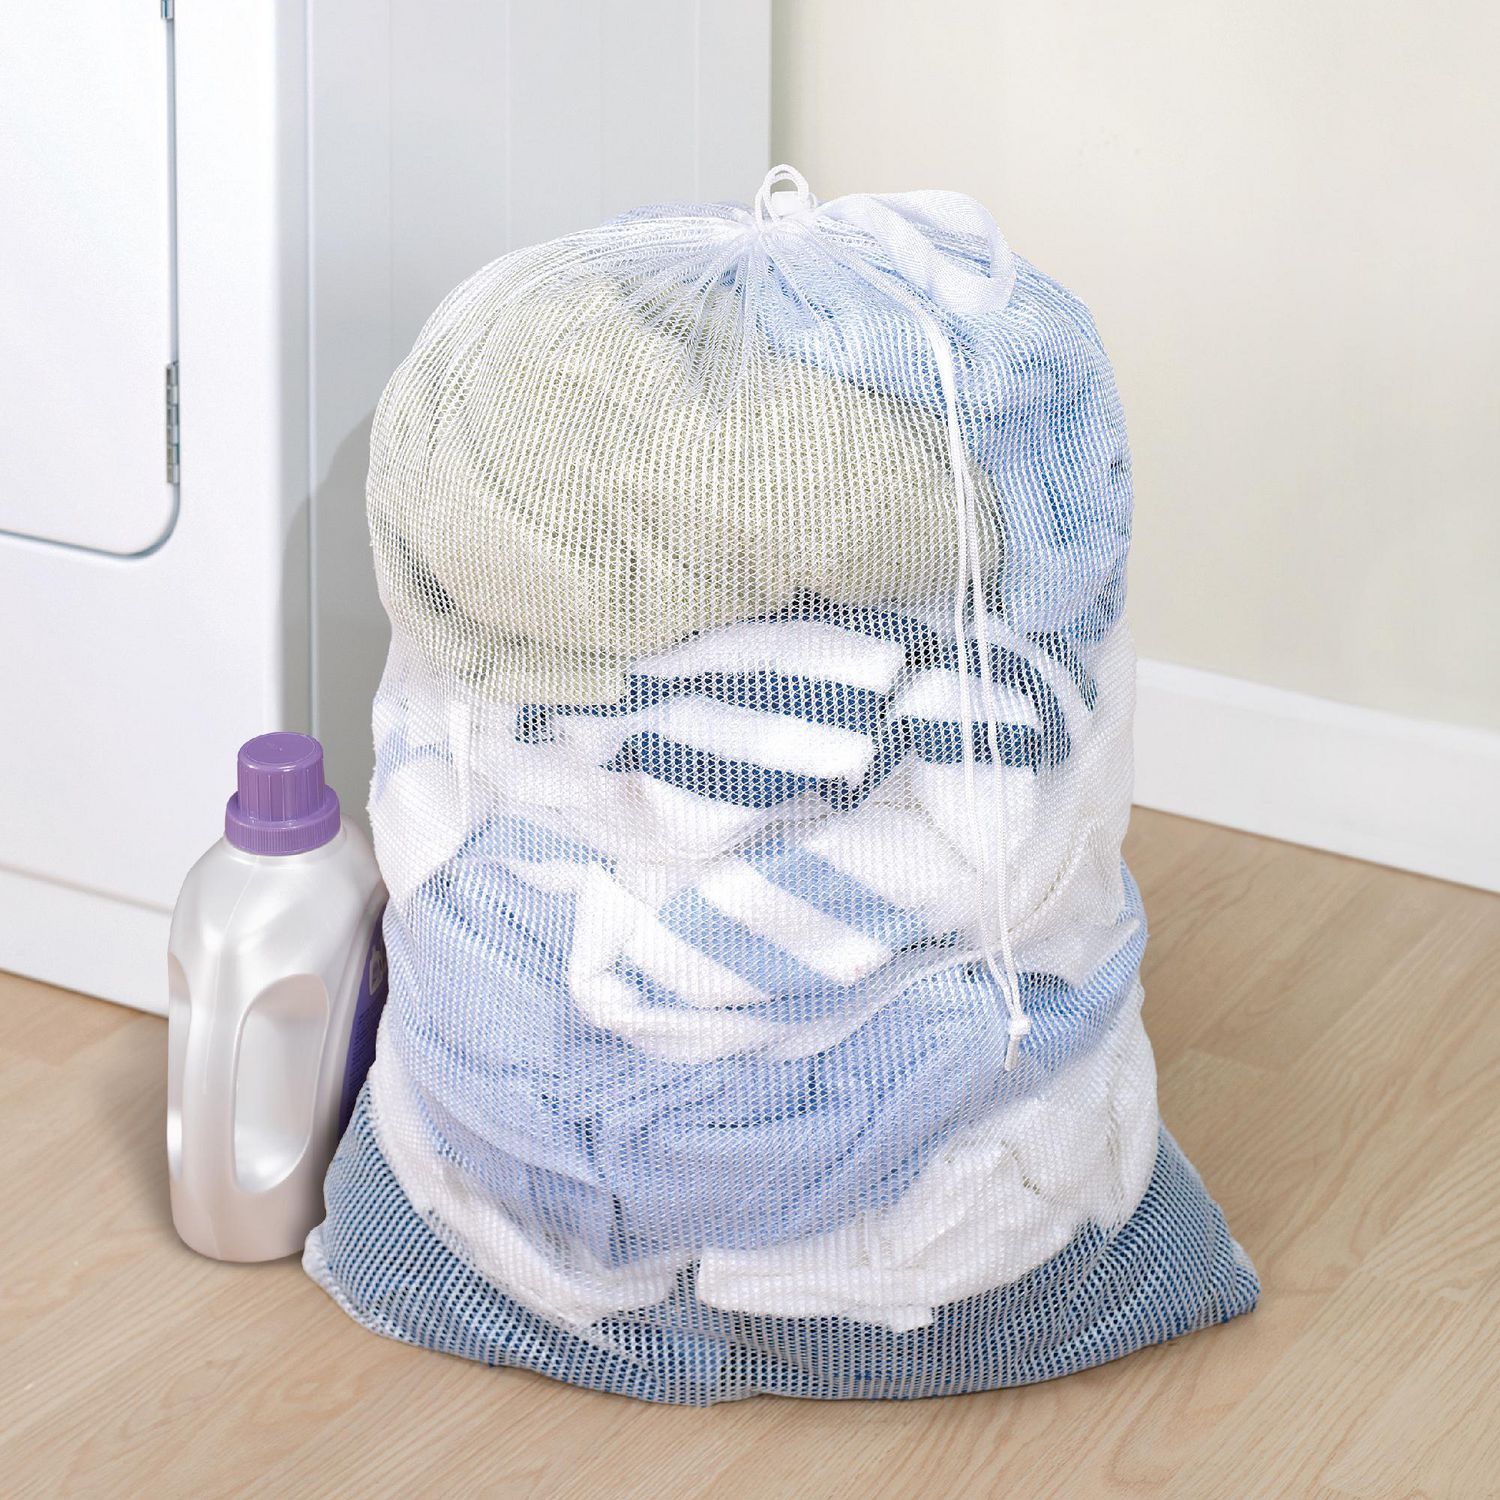 Aggregate more than 89 canvas laundry bag walmart best - esthdonghoadian